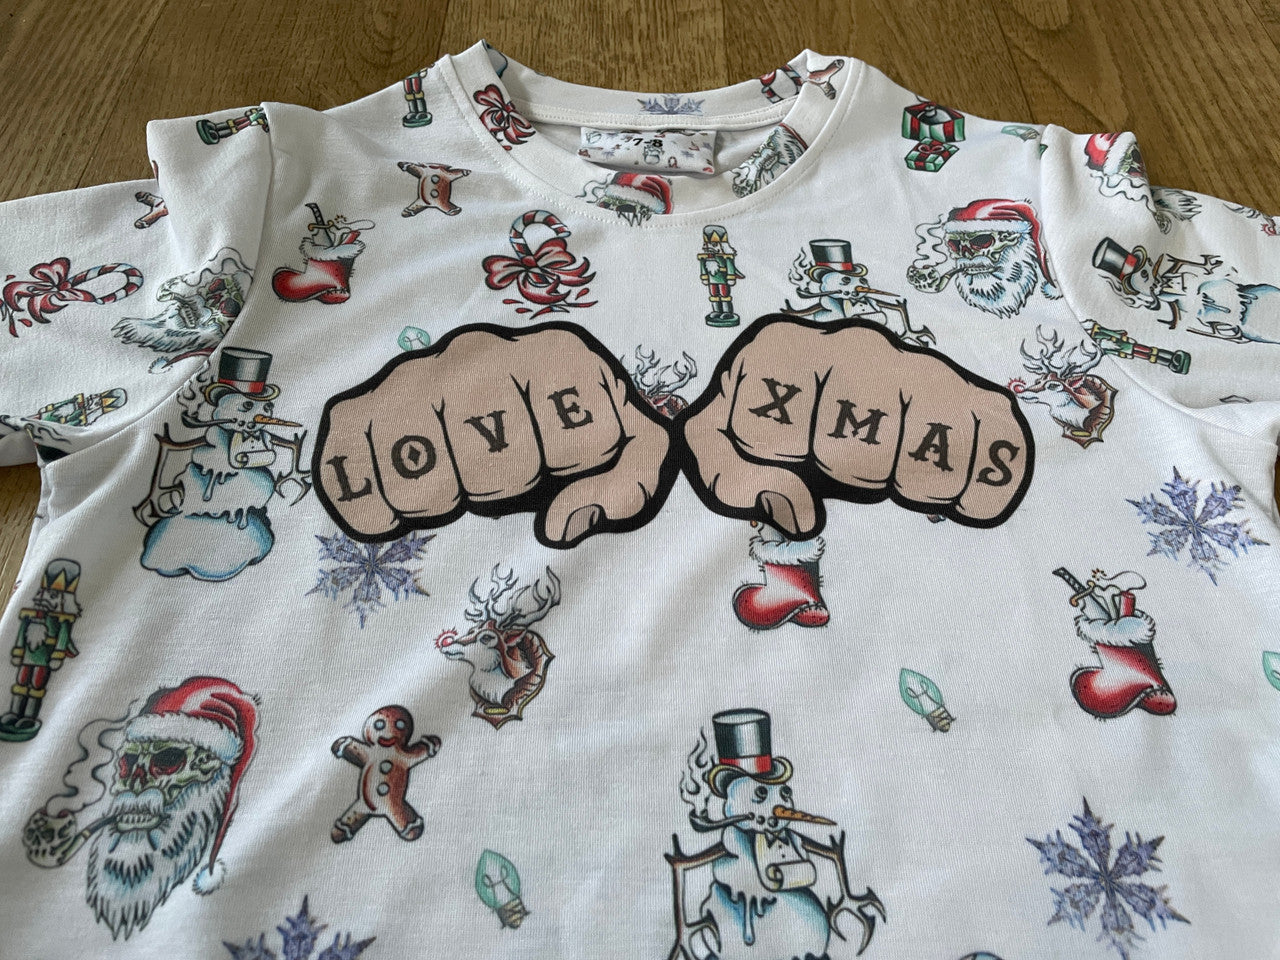 I Love Xmas KiSS KiDS All Over T-Shirt - Christmas - Old School Tattoo Doodles - Skull Cool Ink Alternative Toddler